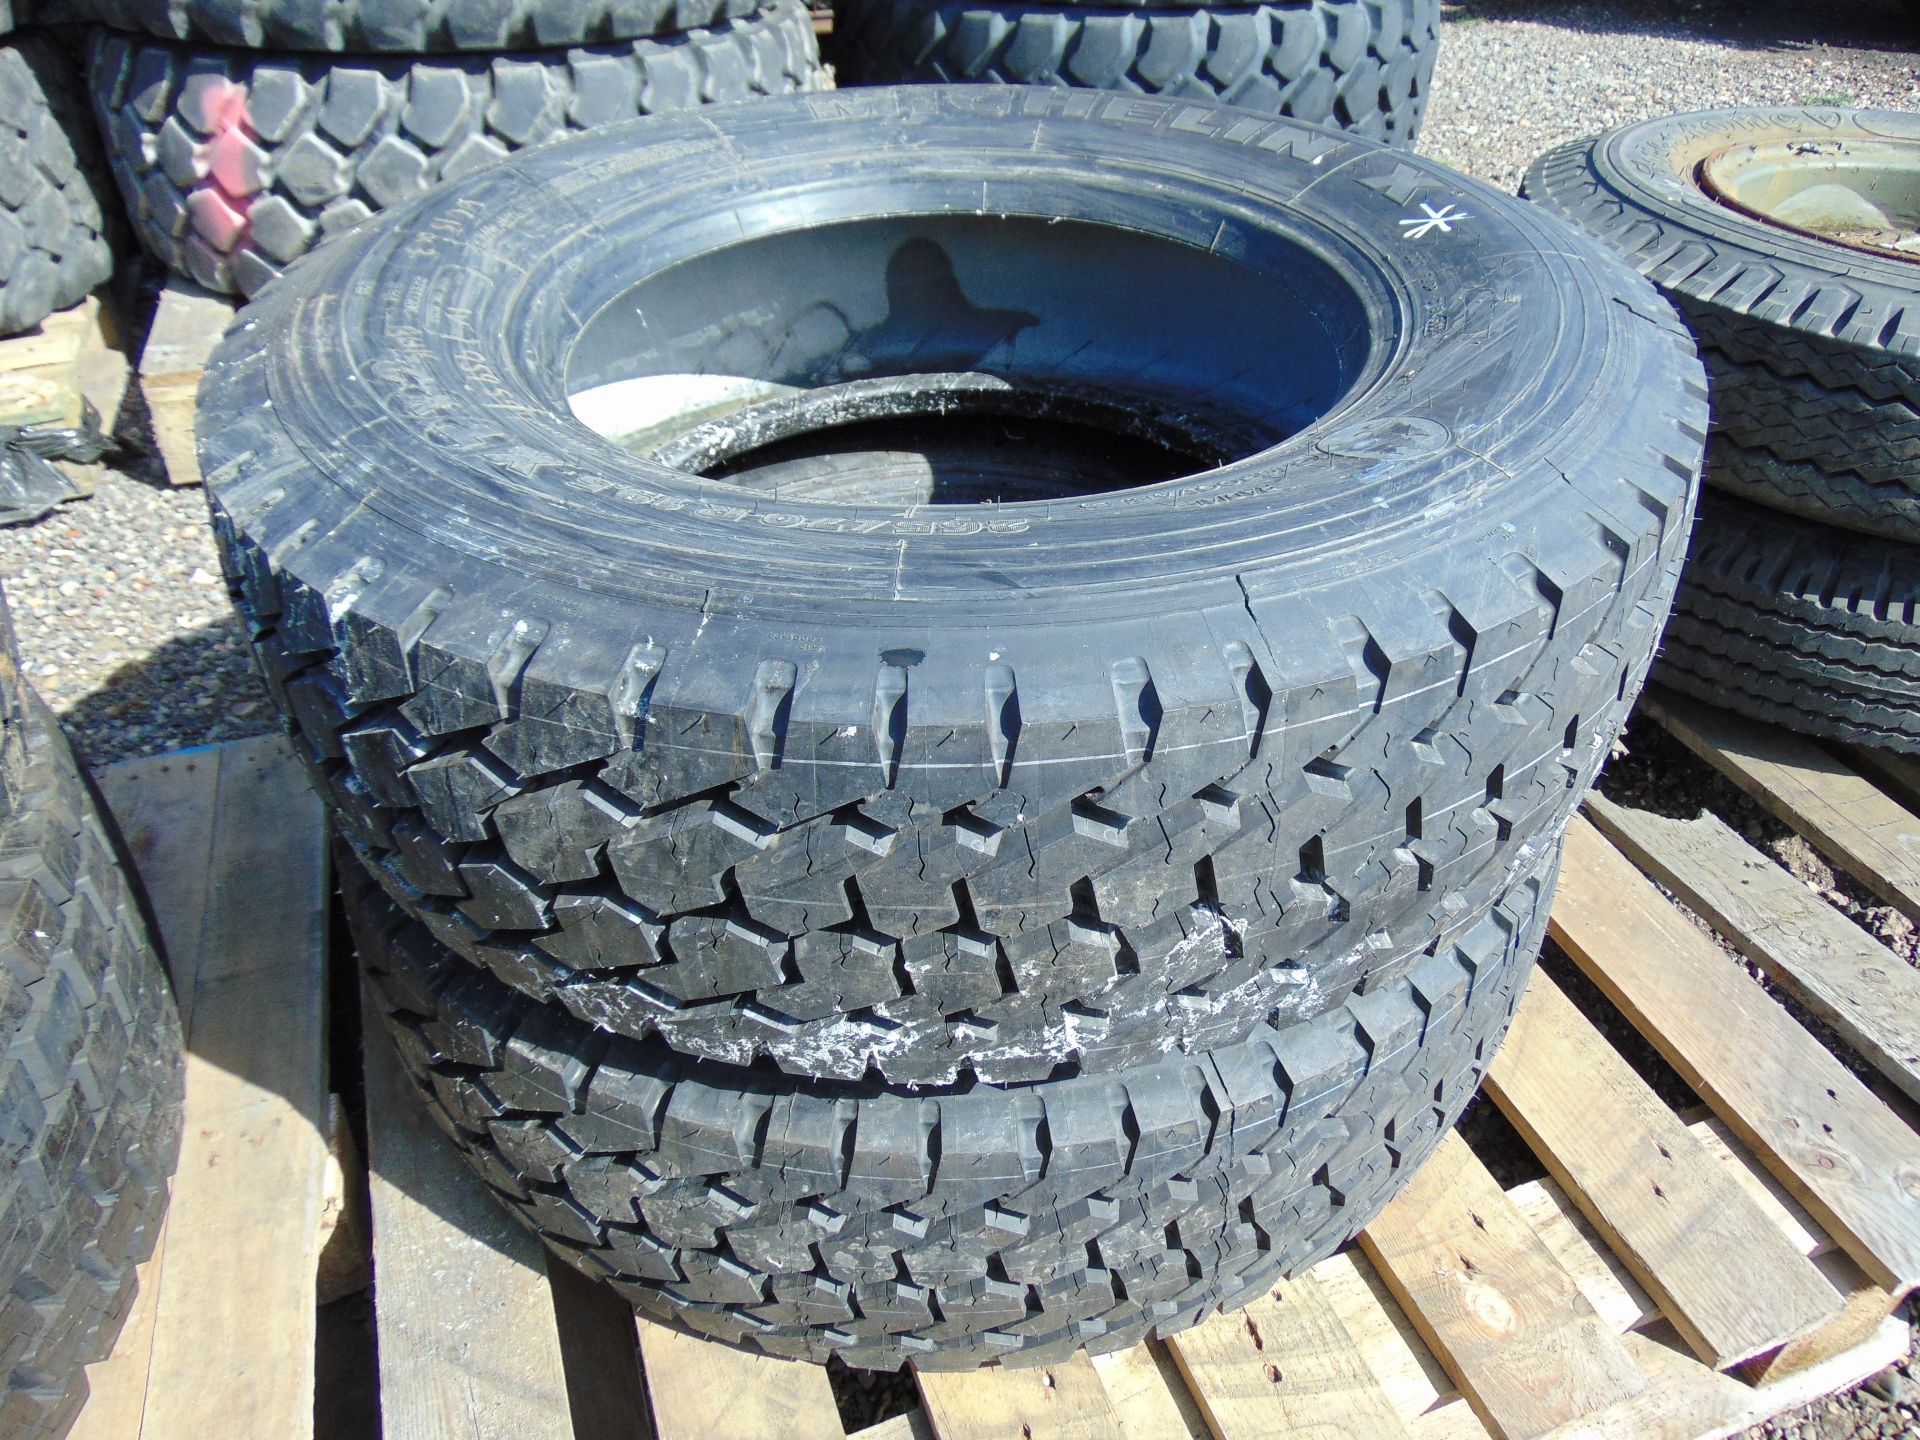 2 x Michelin XTY 2 265/70 R19.5 Tyres